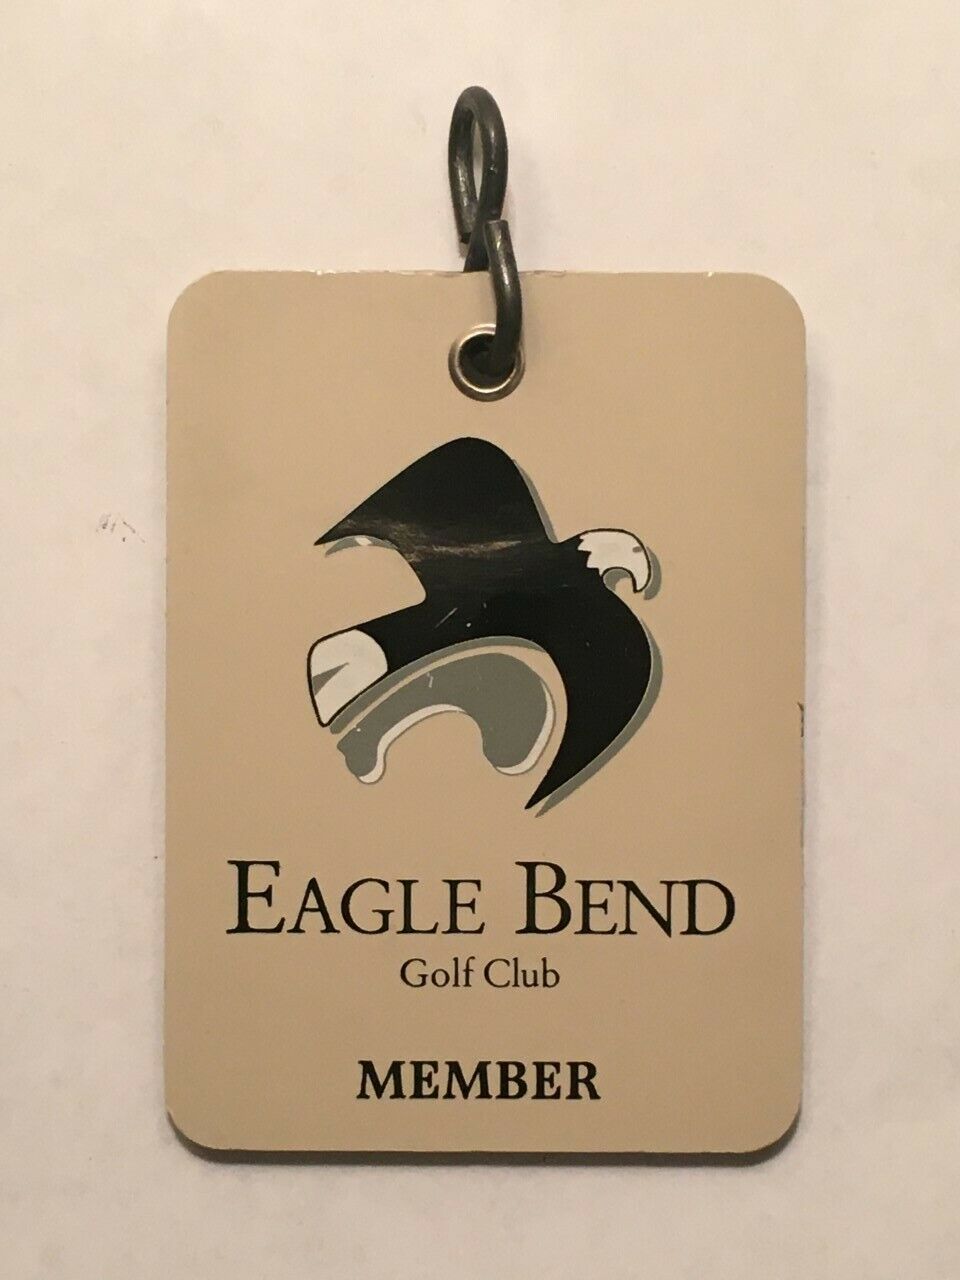 Jack Nicklaus's Eagle Bend Golf Club Golf Bag Tag - Bigfork, Montana - A Beauty!